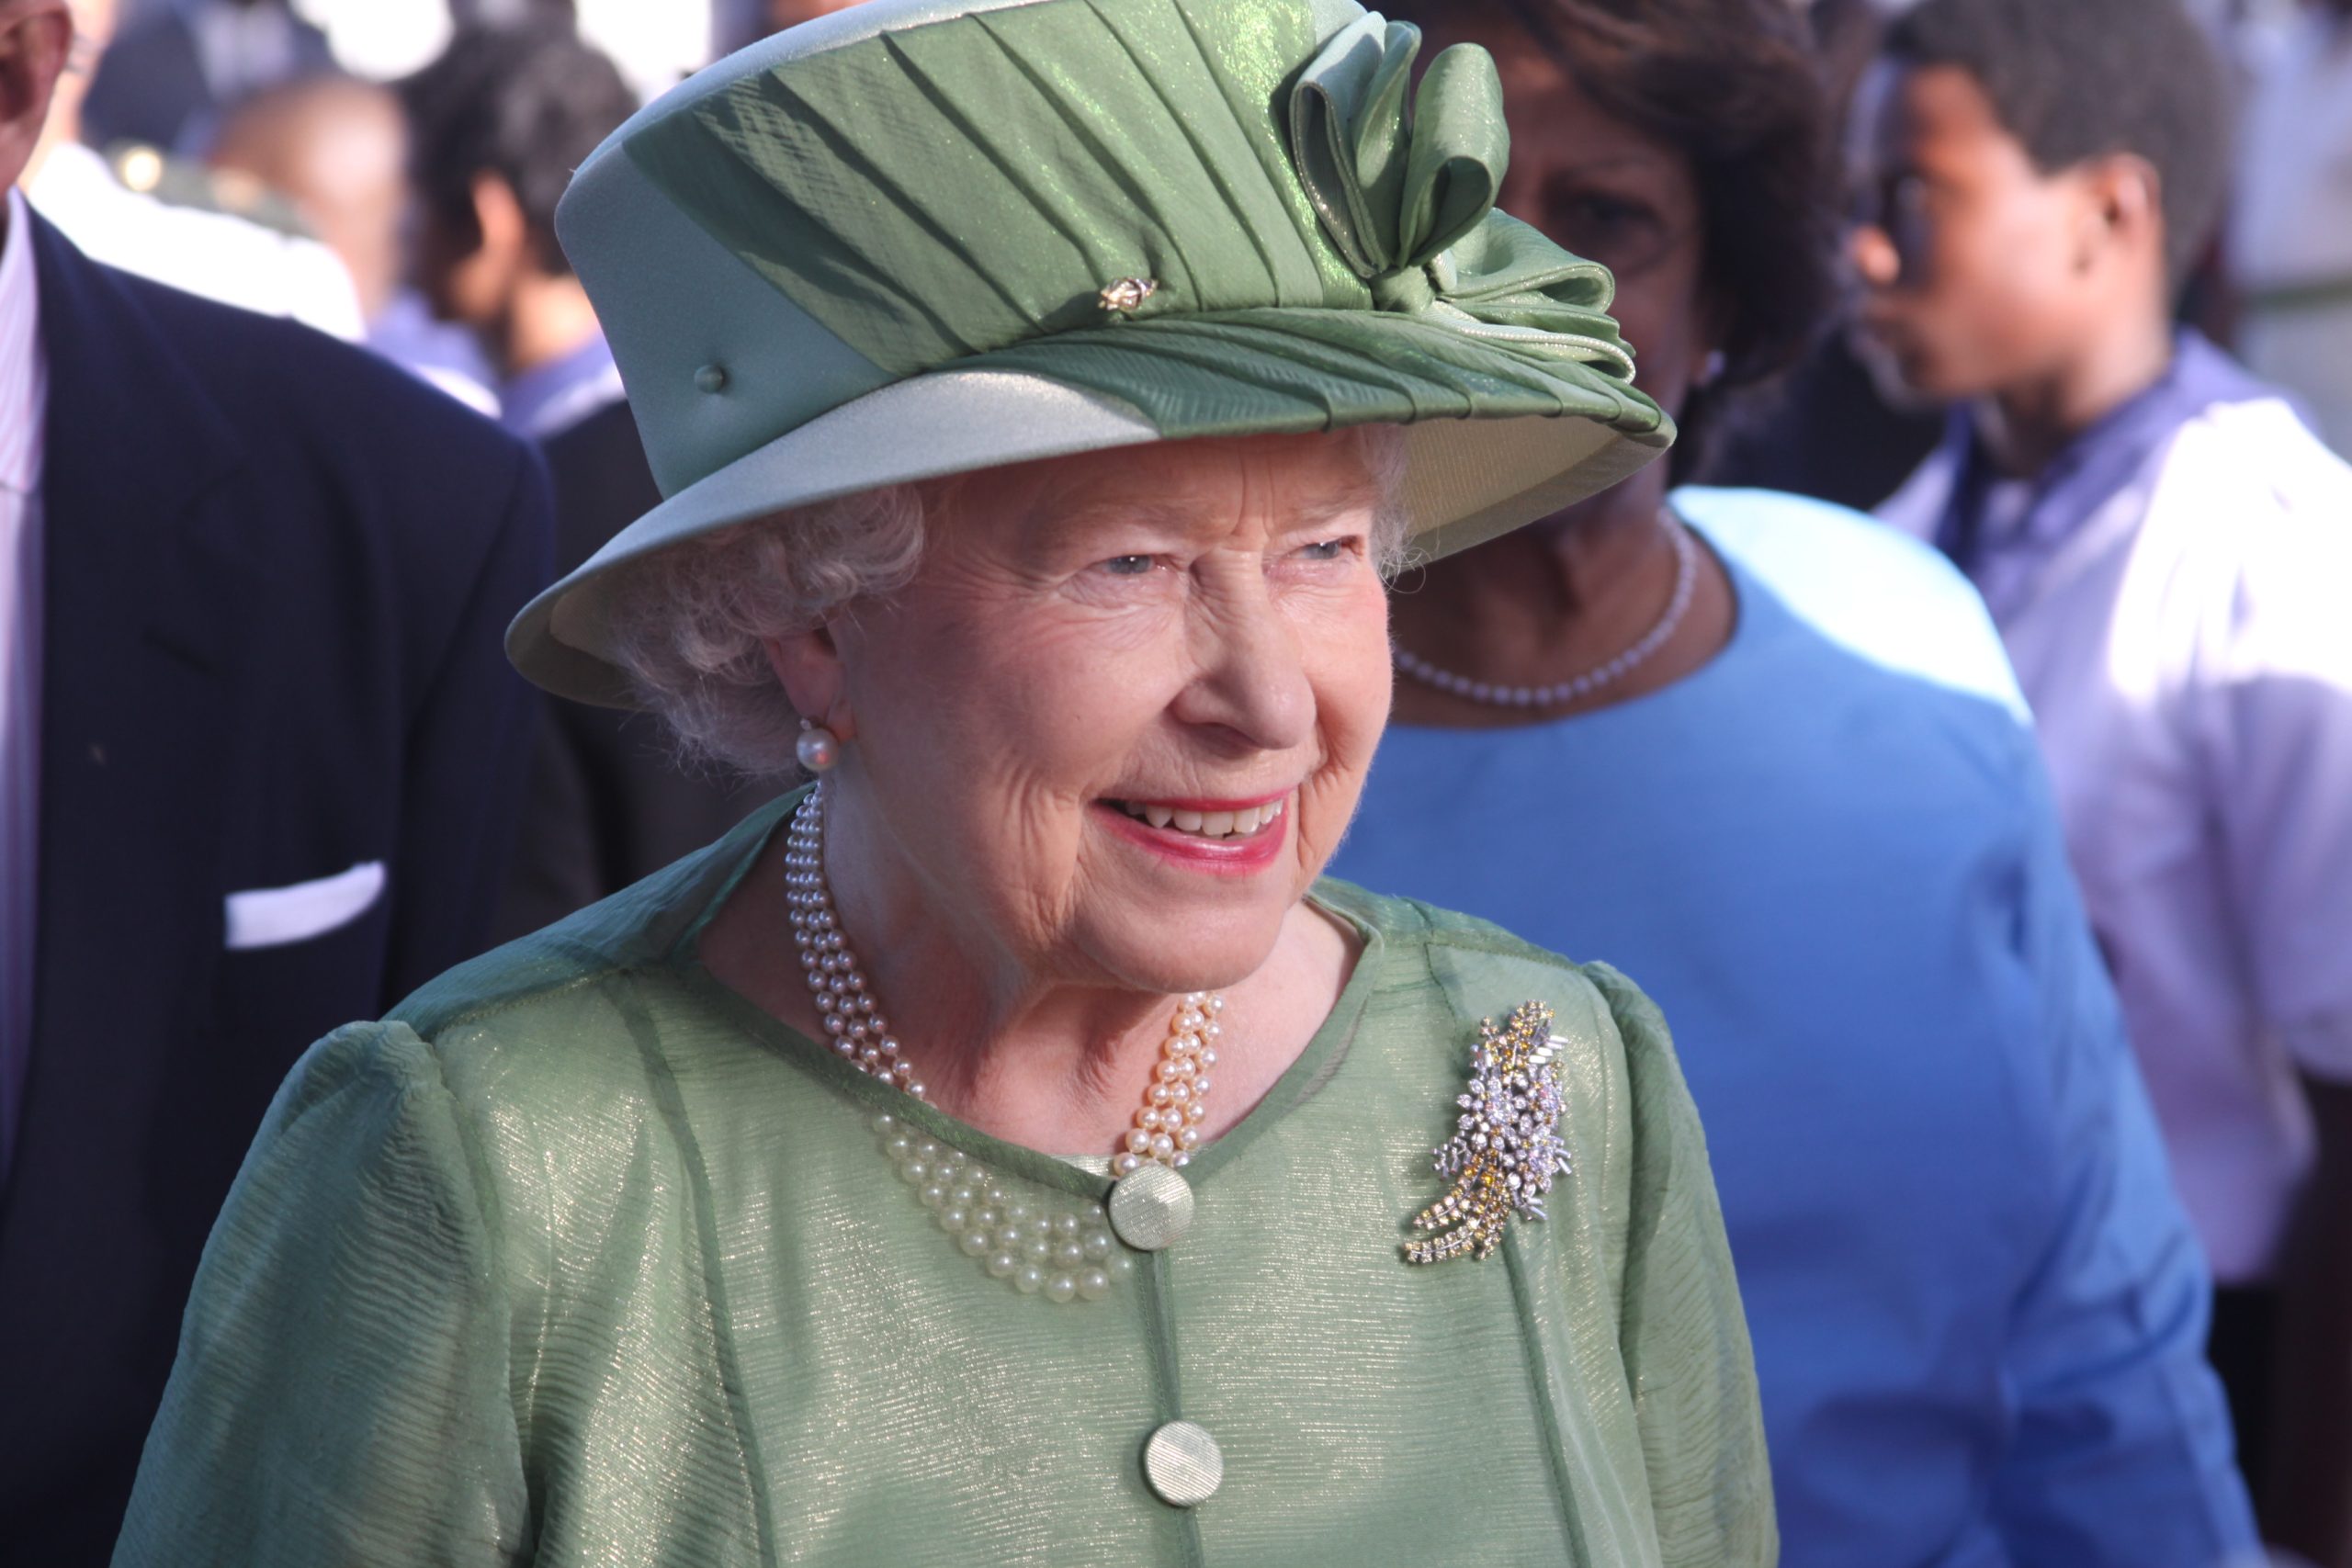 Queen Elizabeth II wearing green hat